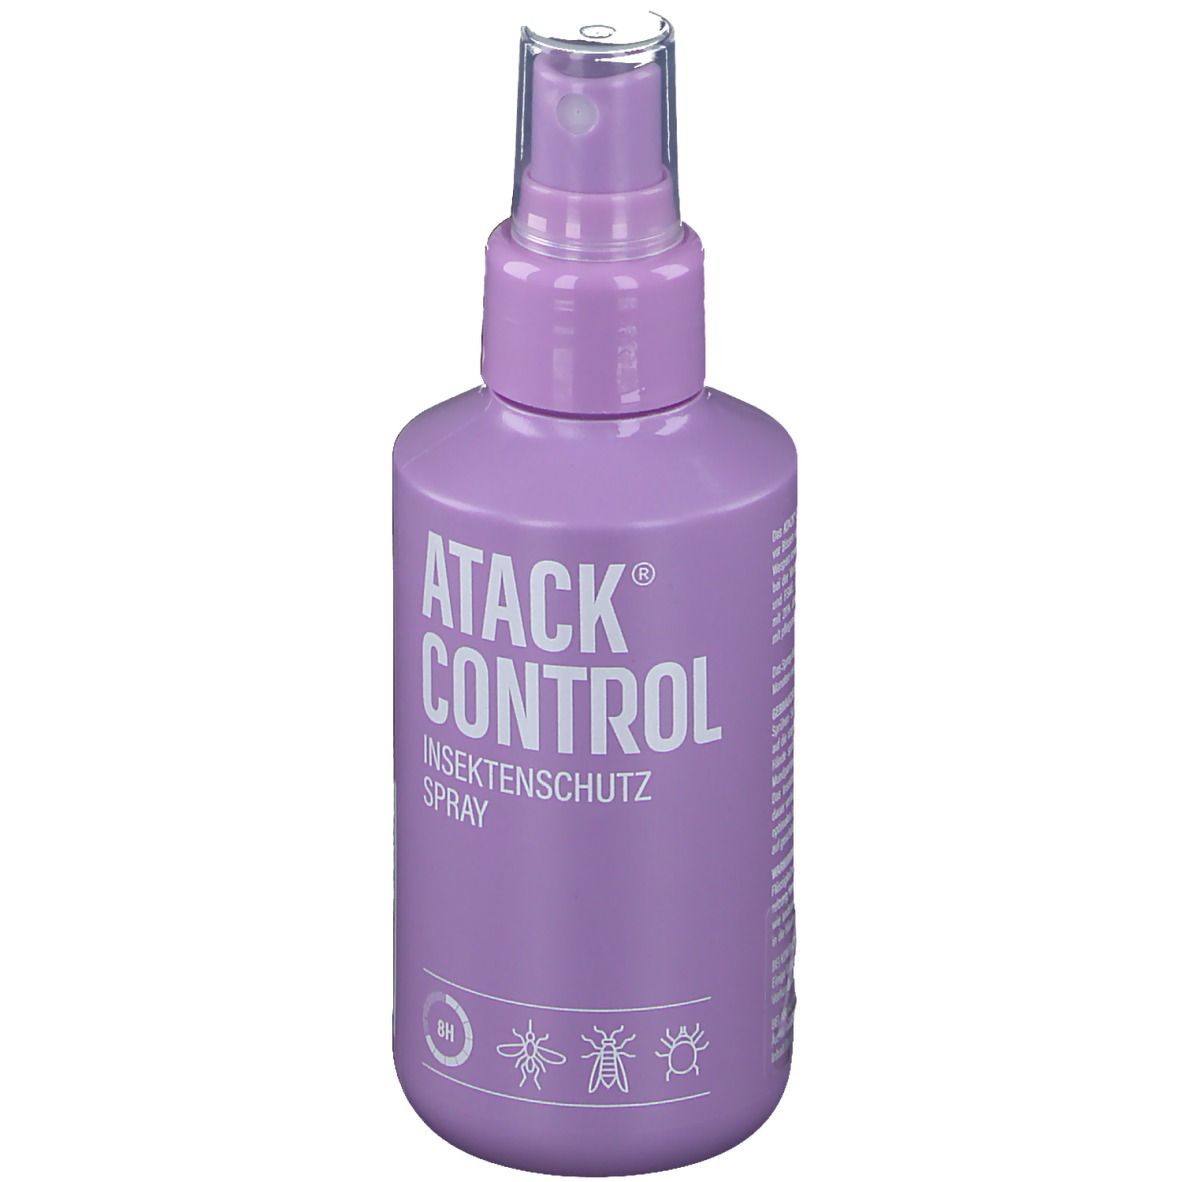 ATACK Control® Insektenschutz Spray